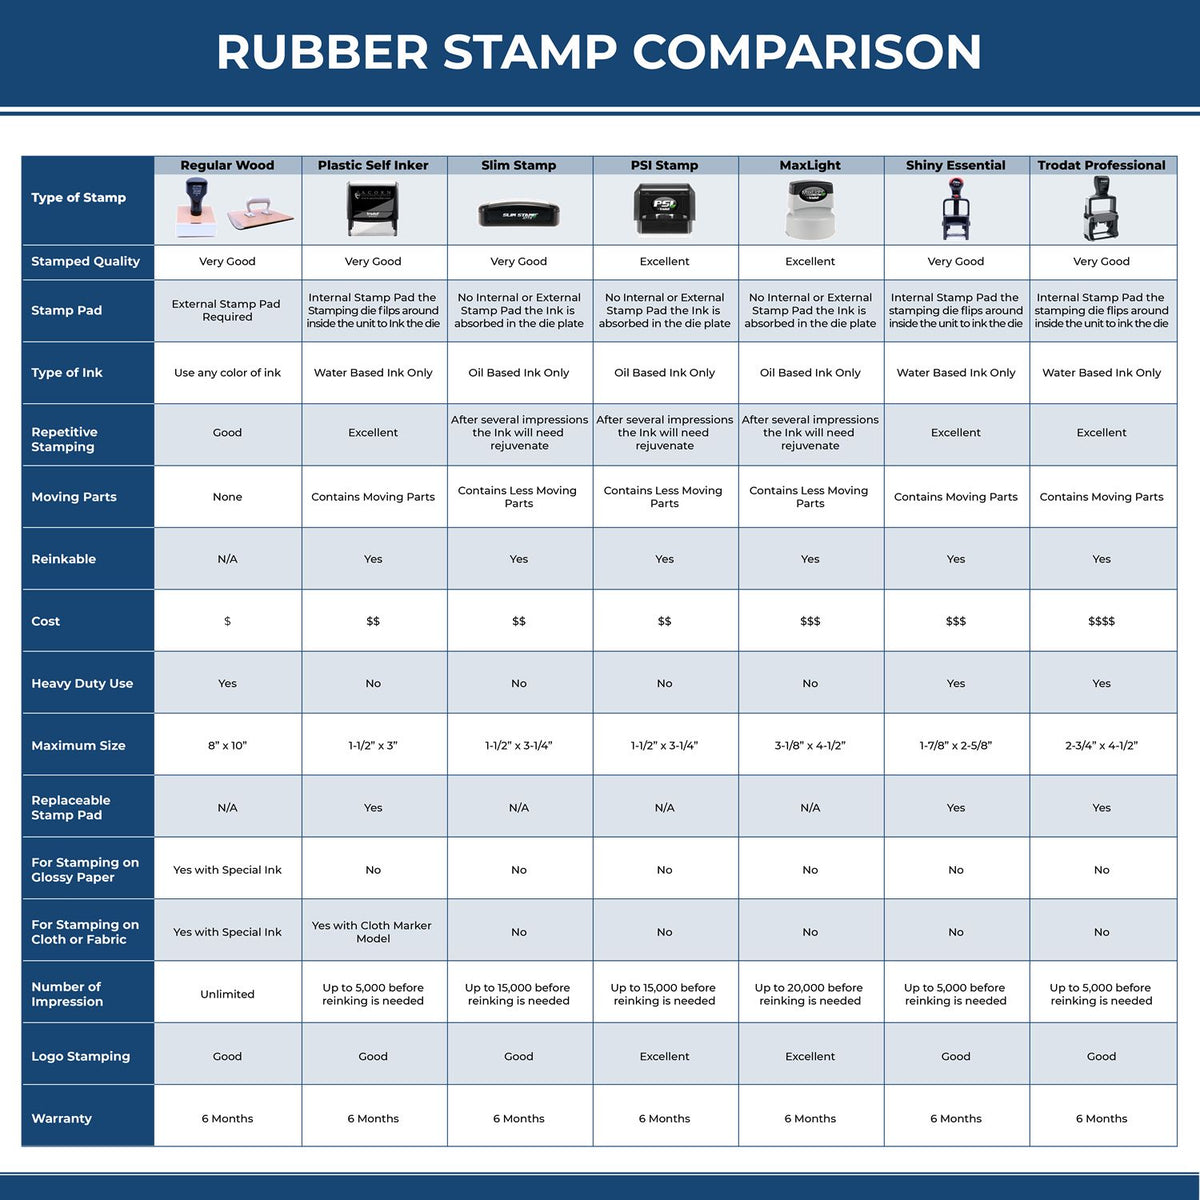 Large Rewrite In Cursive Rubber Stamp 4696R Rubber Stamp Comparison